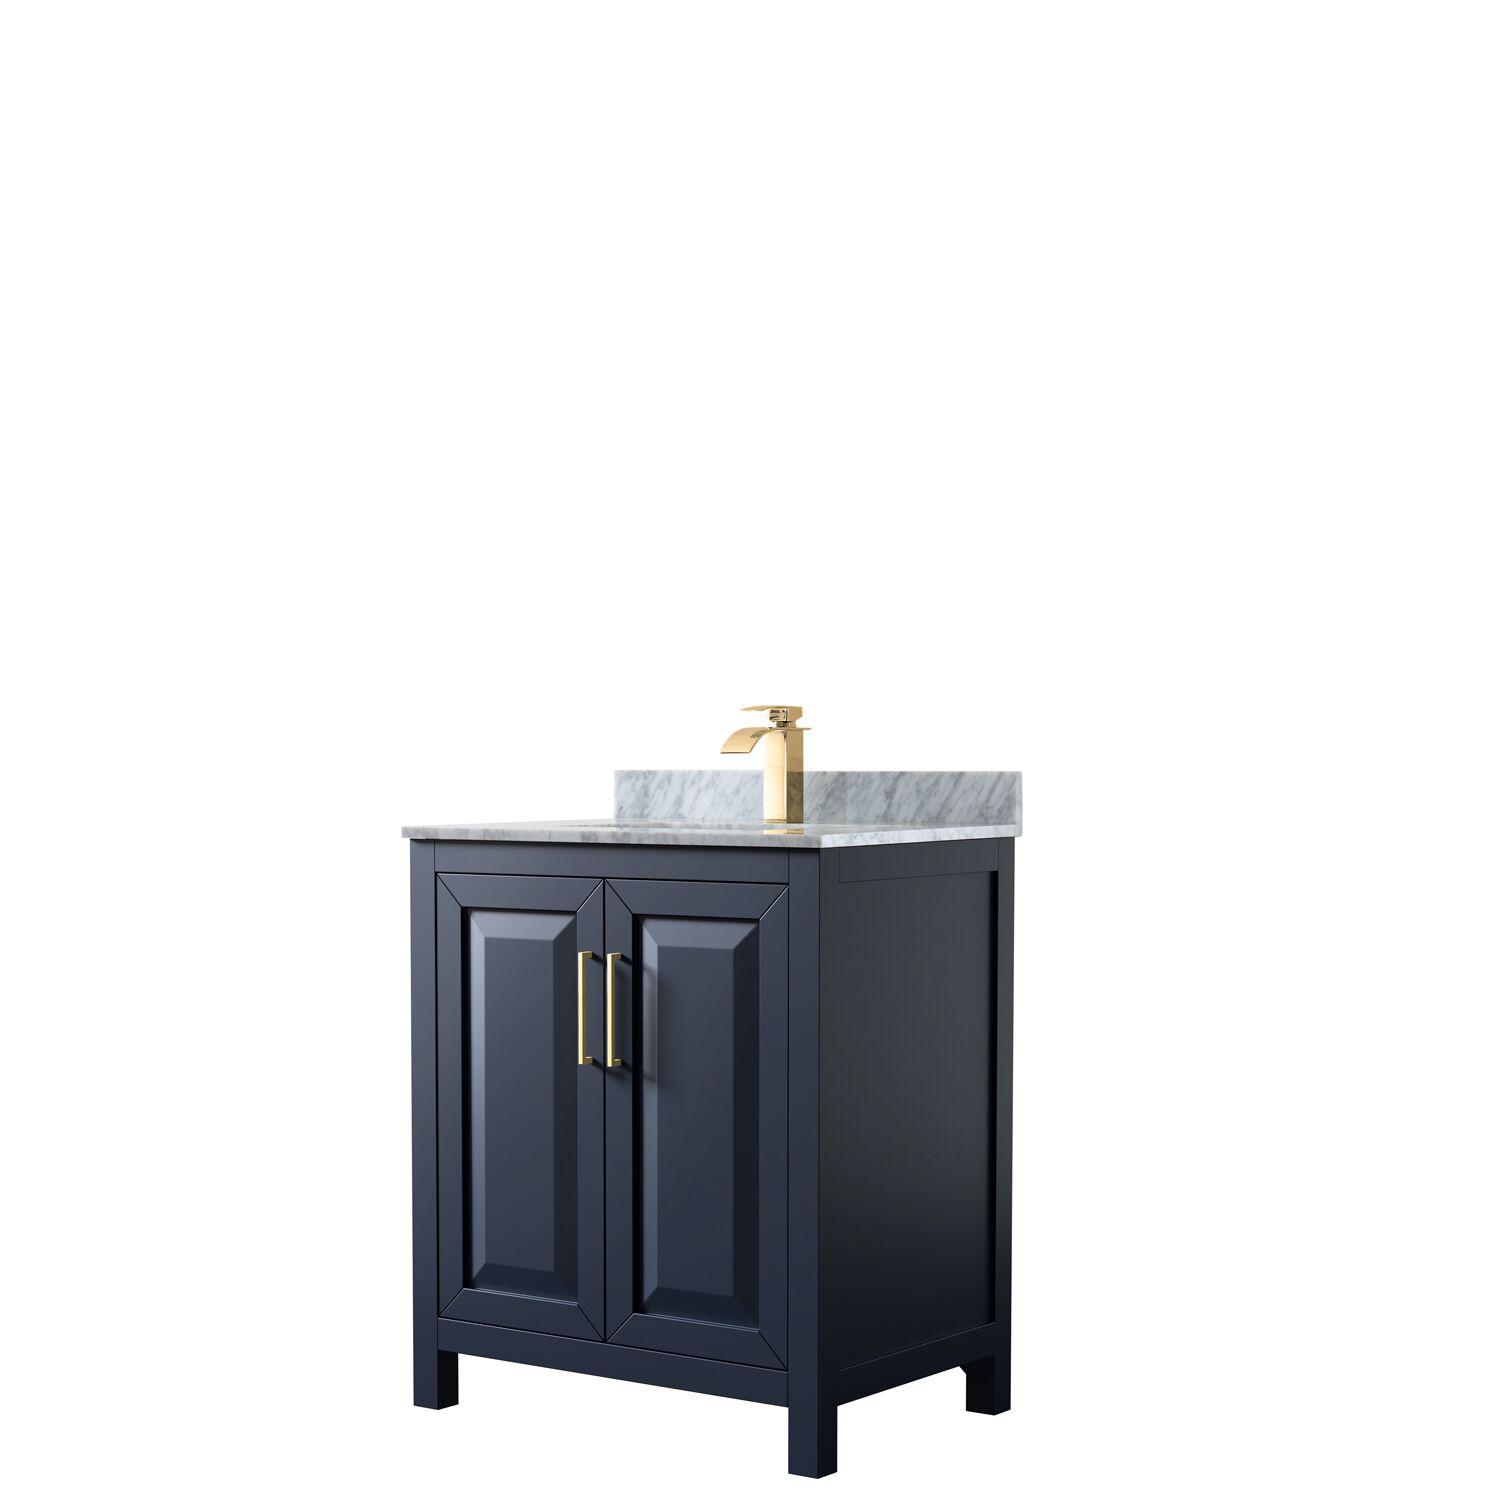 30" Single Bathroom Vanity in Dark Blue with Countertop, Mirror and Medicine Cabinet Options